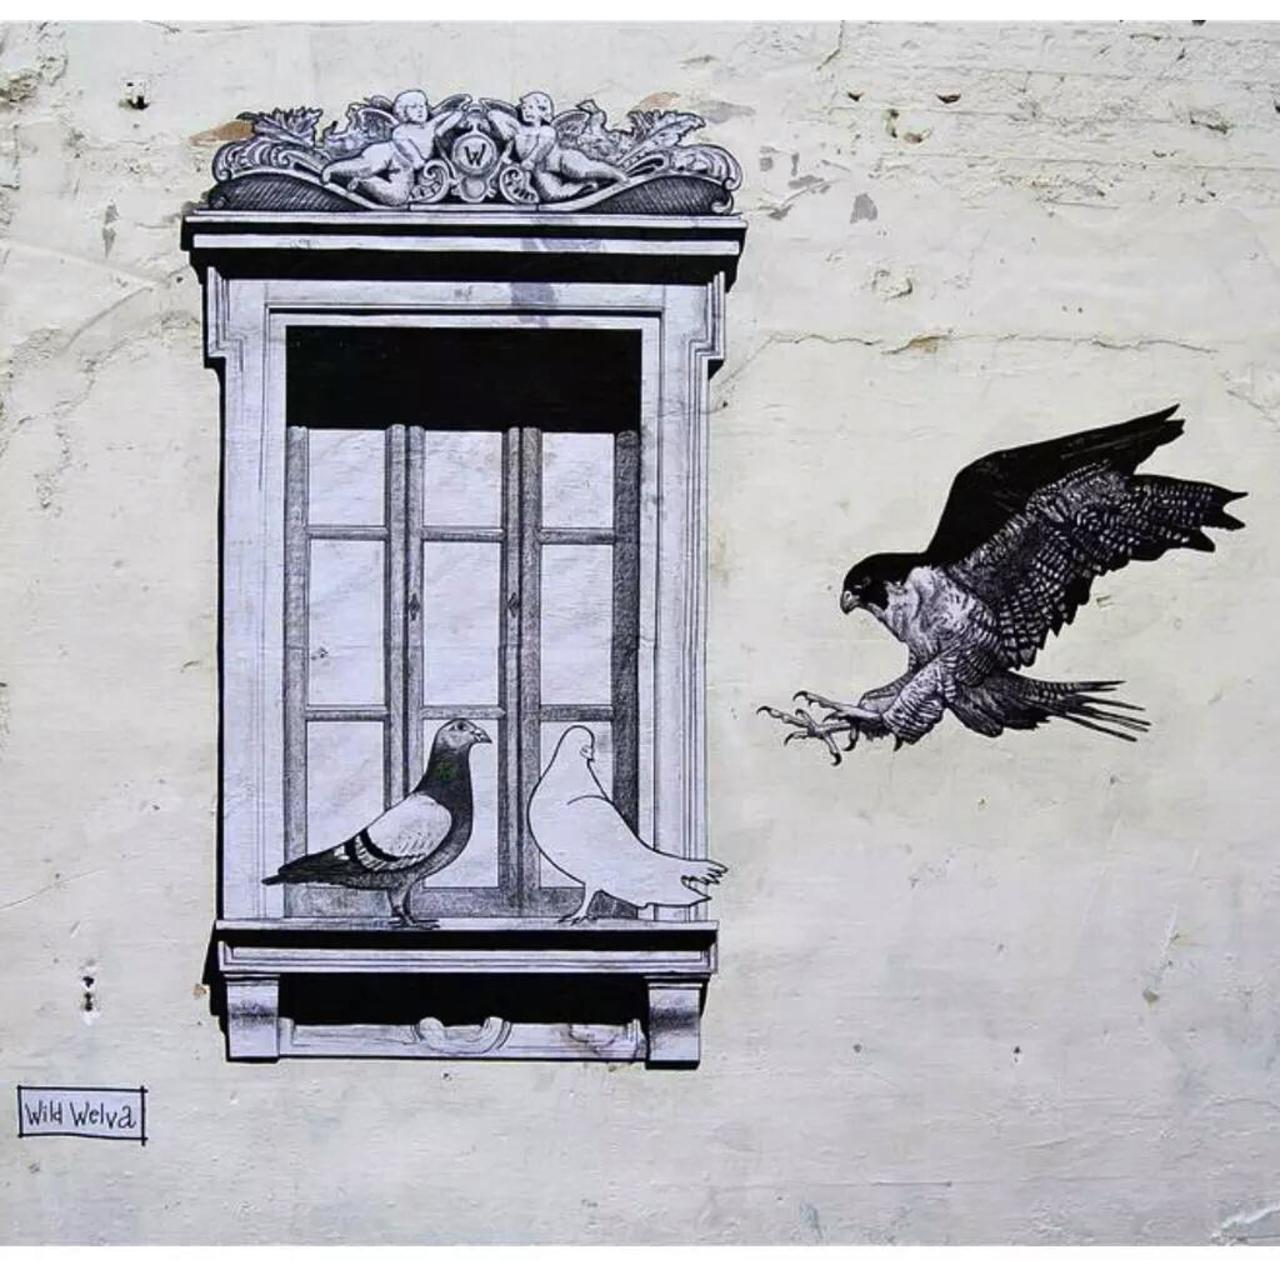 RT @QueGraffiti: Obra de Wildwelva en Huelva, España 
#streetart #mural #graffiti #art http://t.co/L0MEjDs8e5